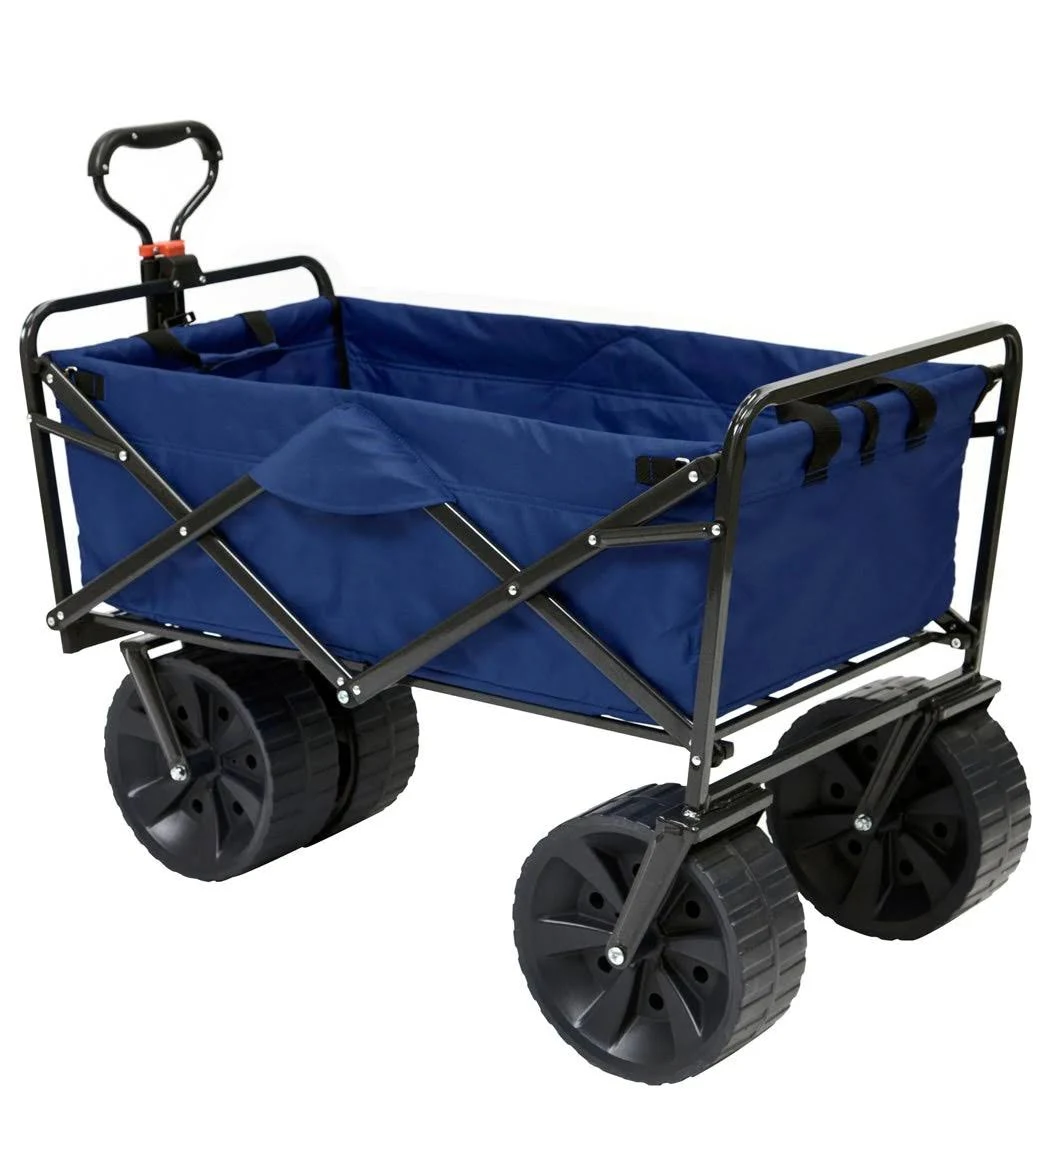 Mac Sports Heavy Duty Collapsible Folding All Terrain Utility Beach Wagon Cart Blue Black